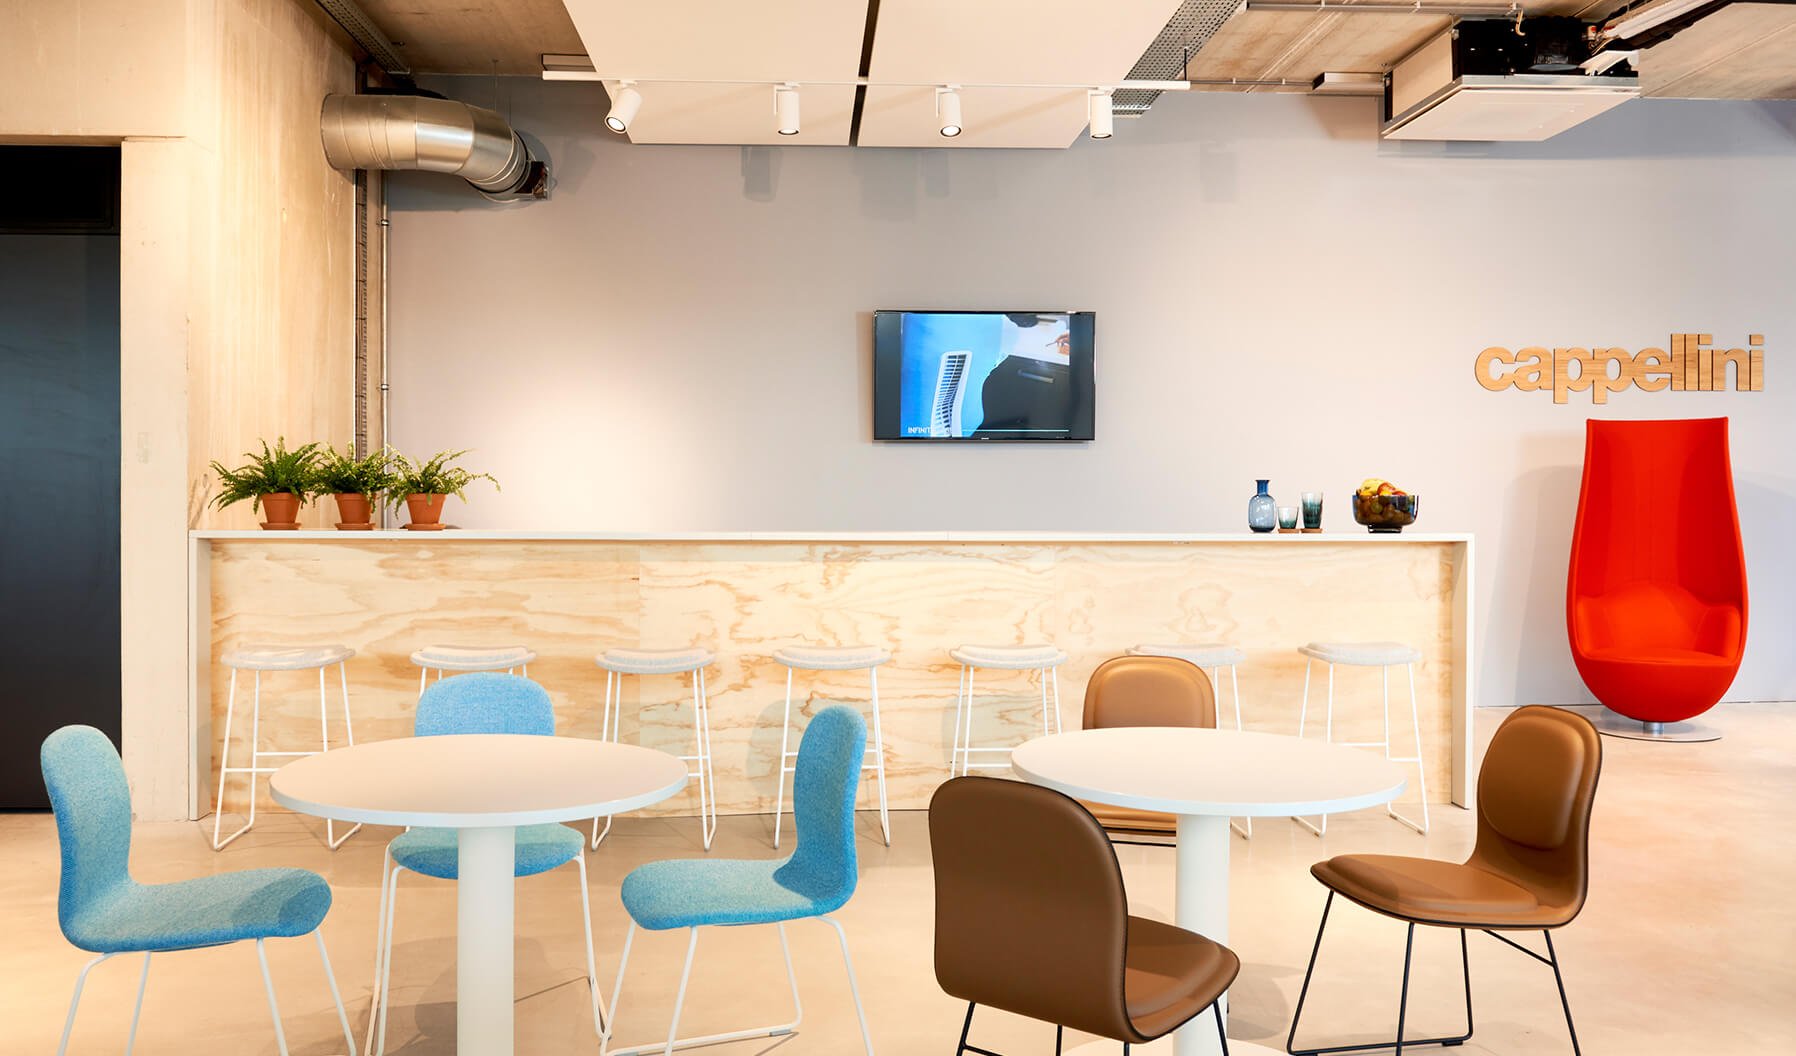 Cappellini咖啡厅营造出时尚闲适的环境，使您可以在午餐时间放松身心，或离开工作环境闲谈片刻。Framery提供了专心工作或私下交谈的隔间。